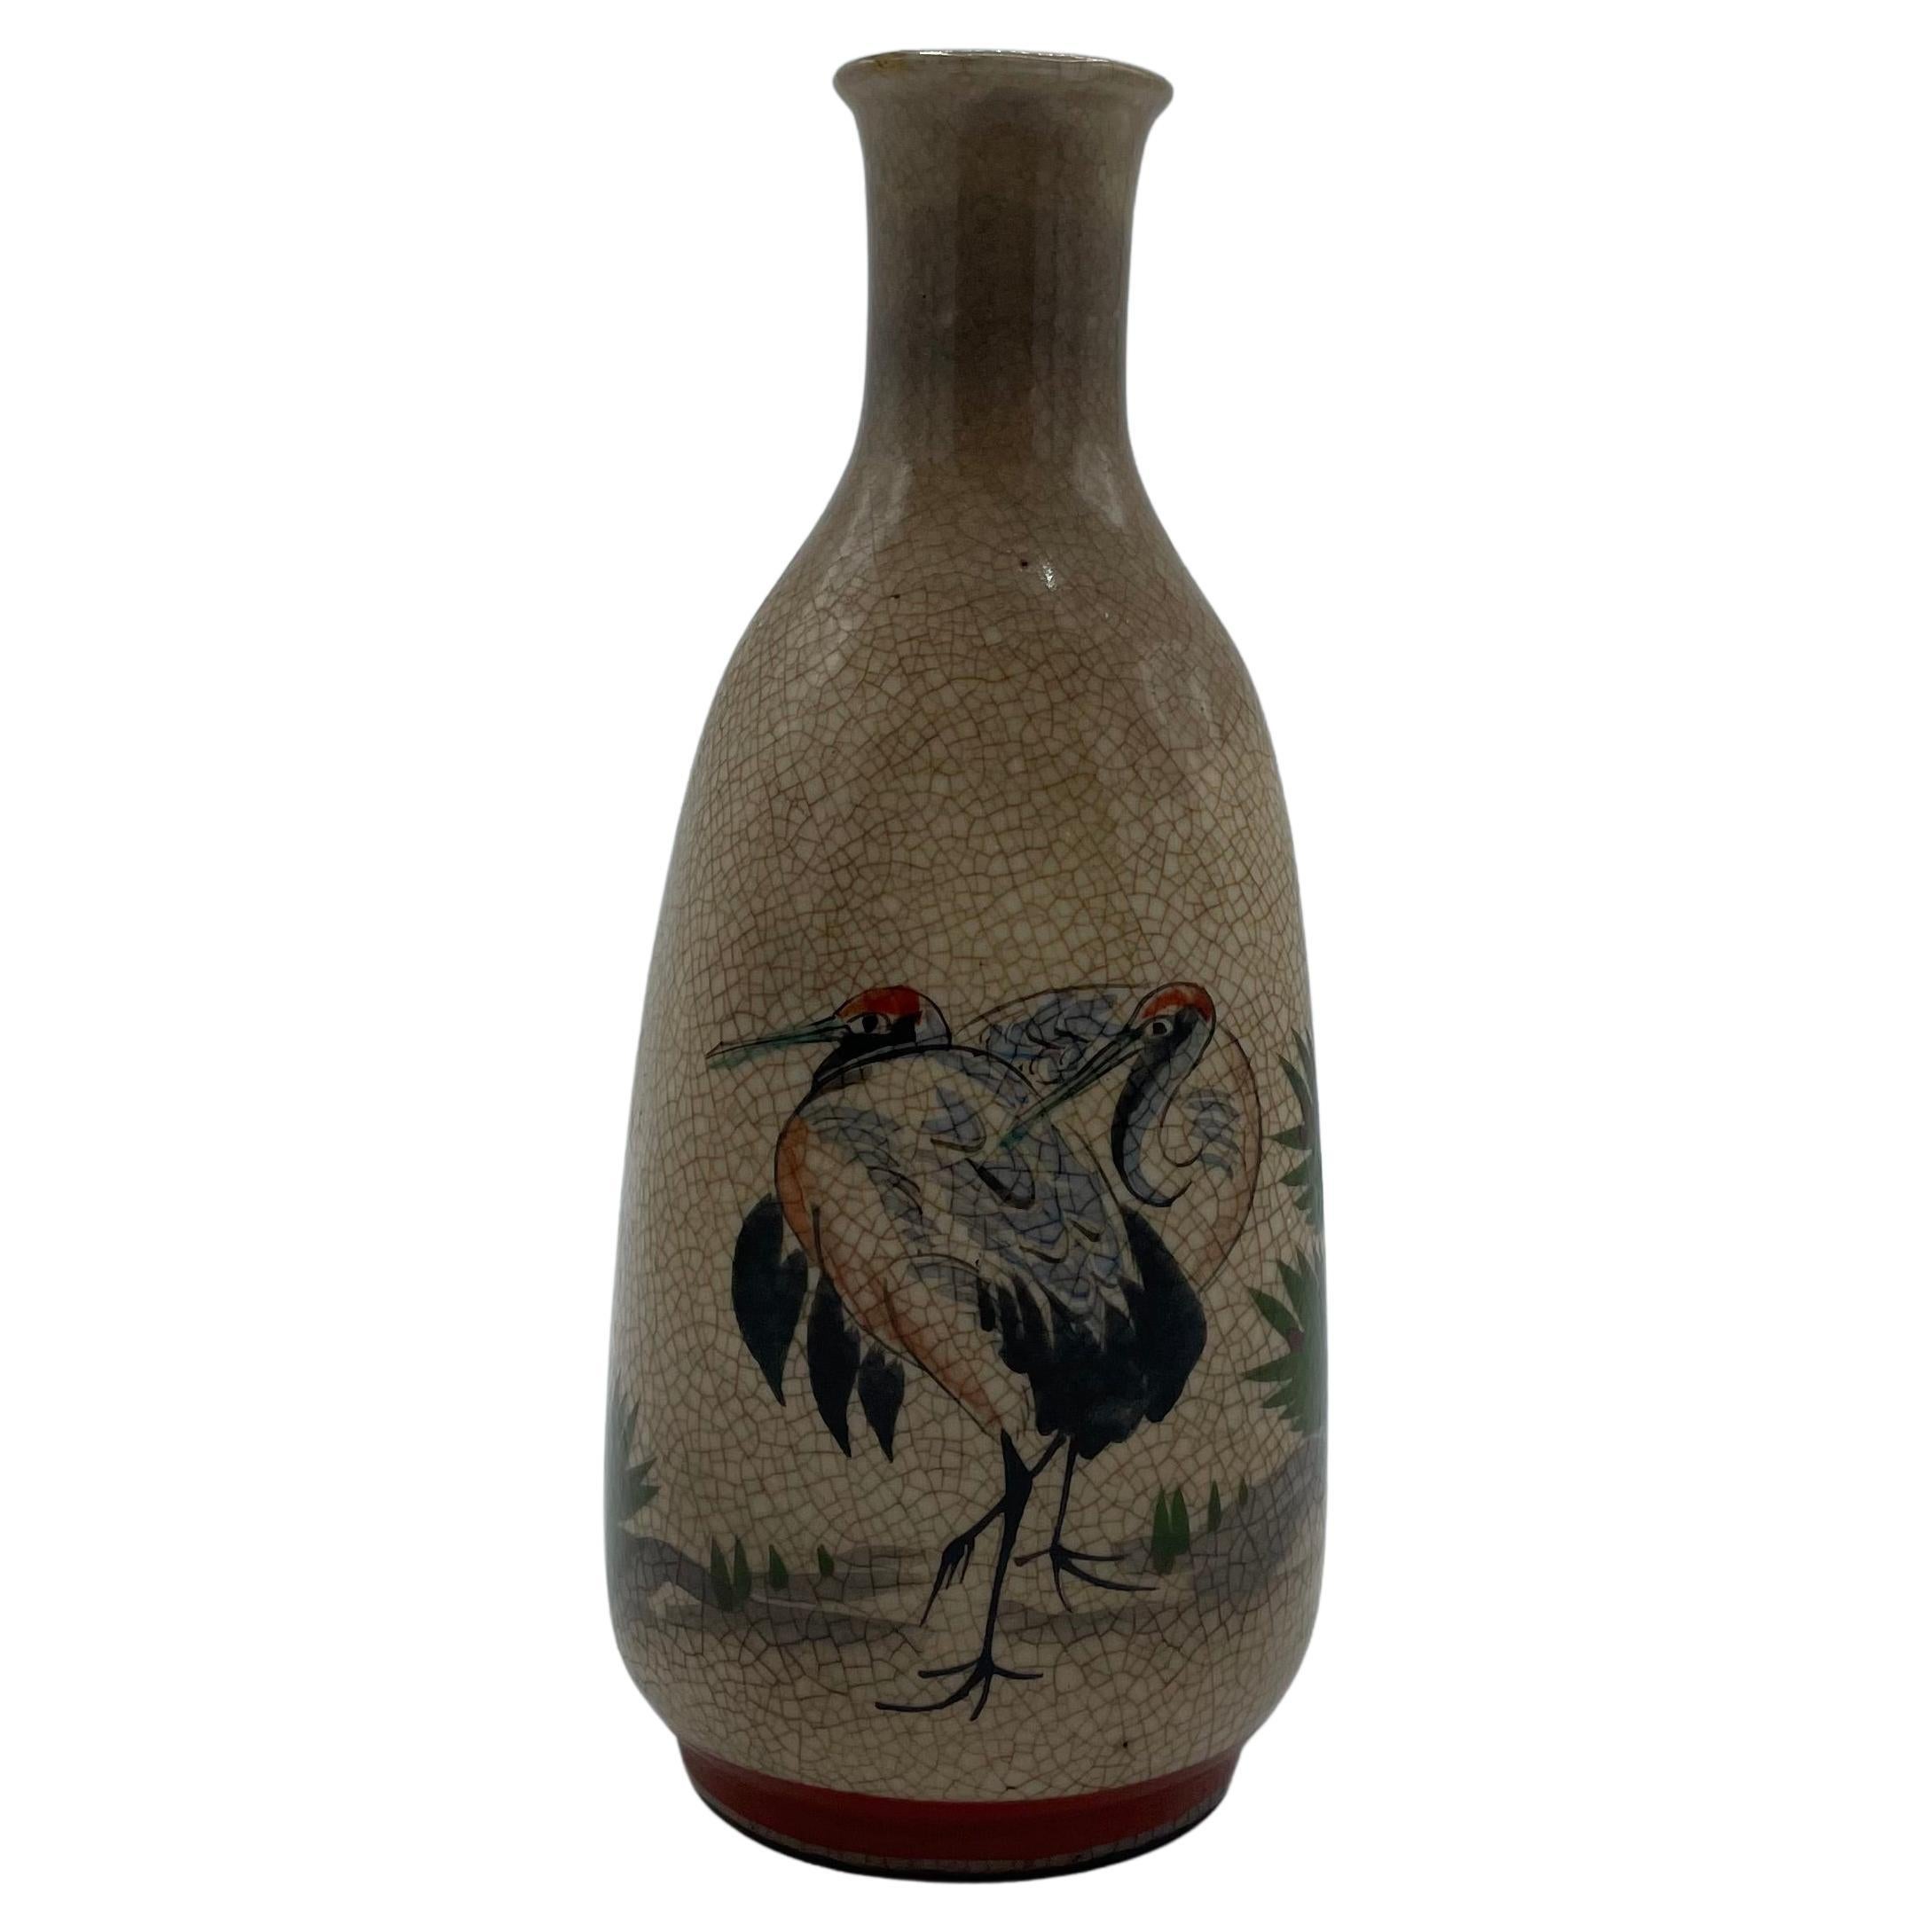 Japanese Antique Sake Bottle with Tsuru Birds 1960s